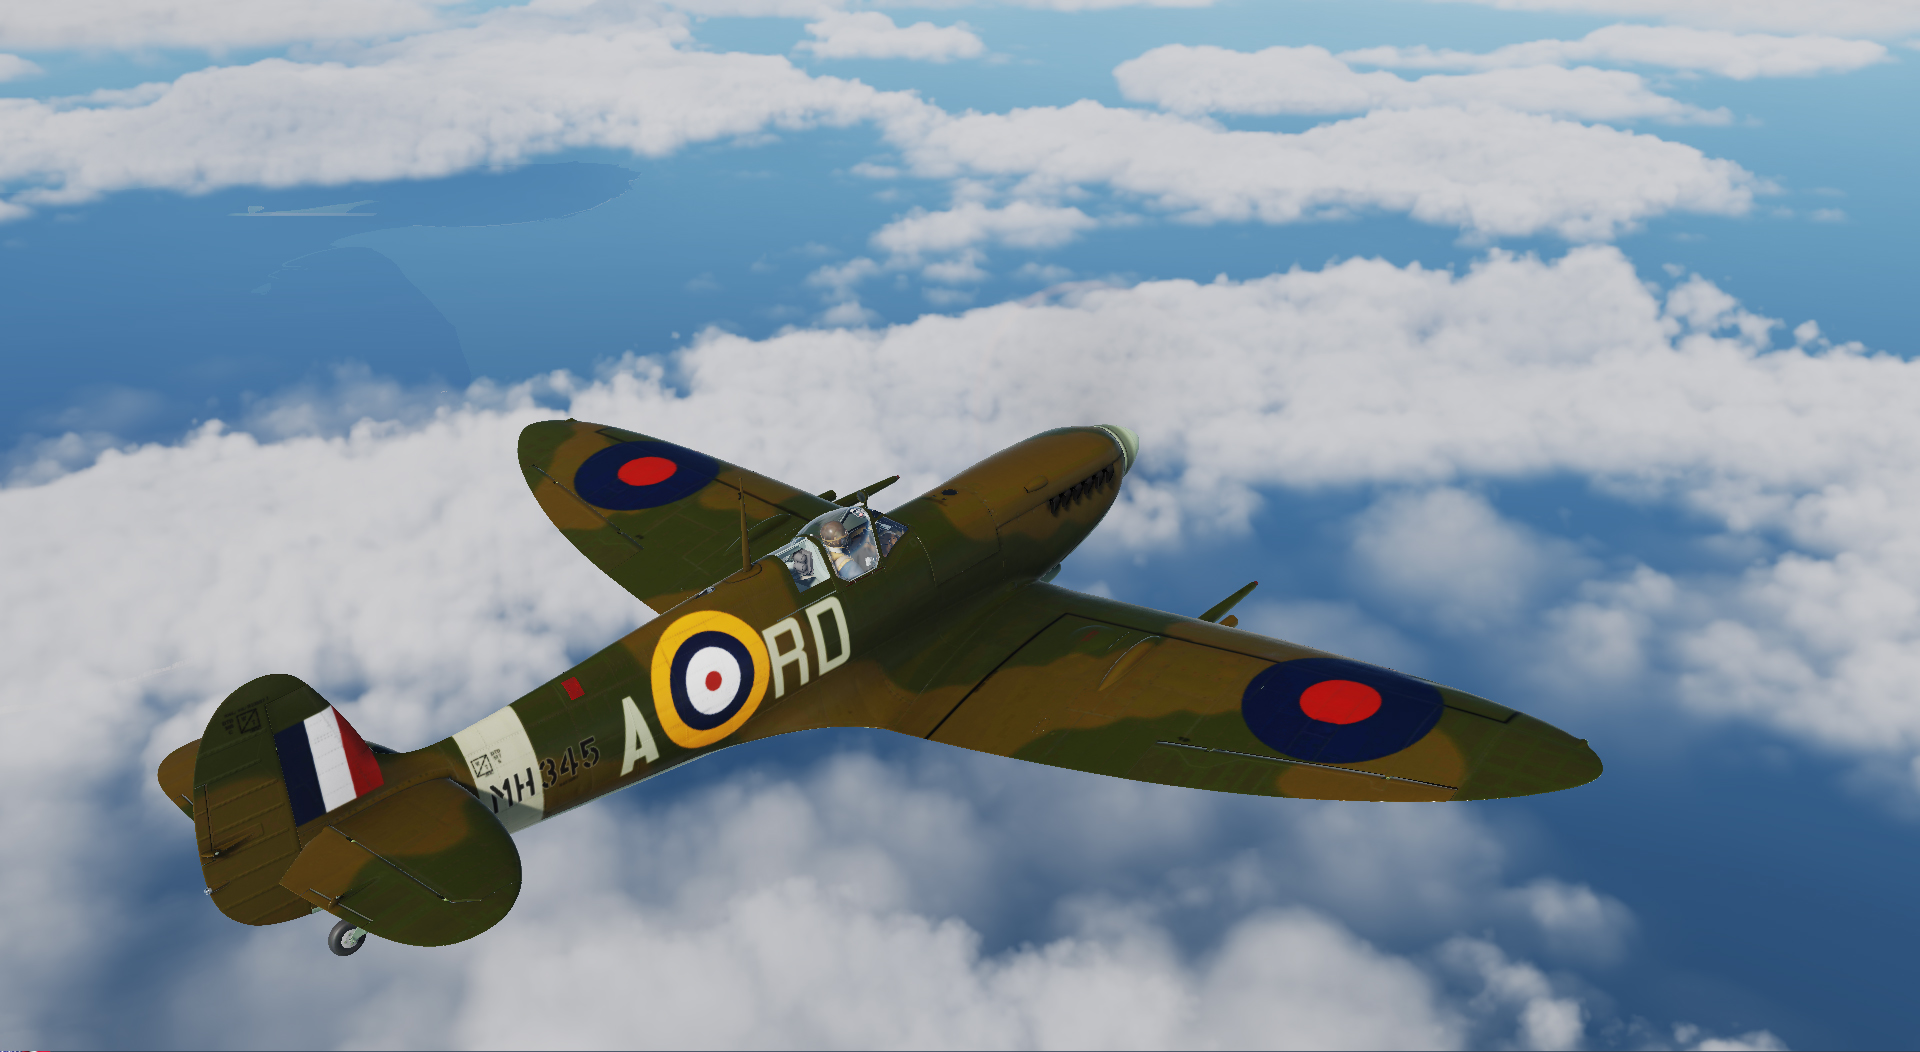 DCS RAF Spitfire Mk 1a High Quality Repaint for the Spitfire LF Mk. IX